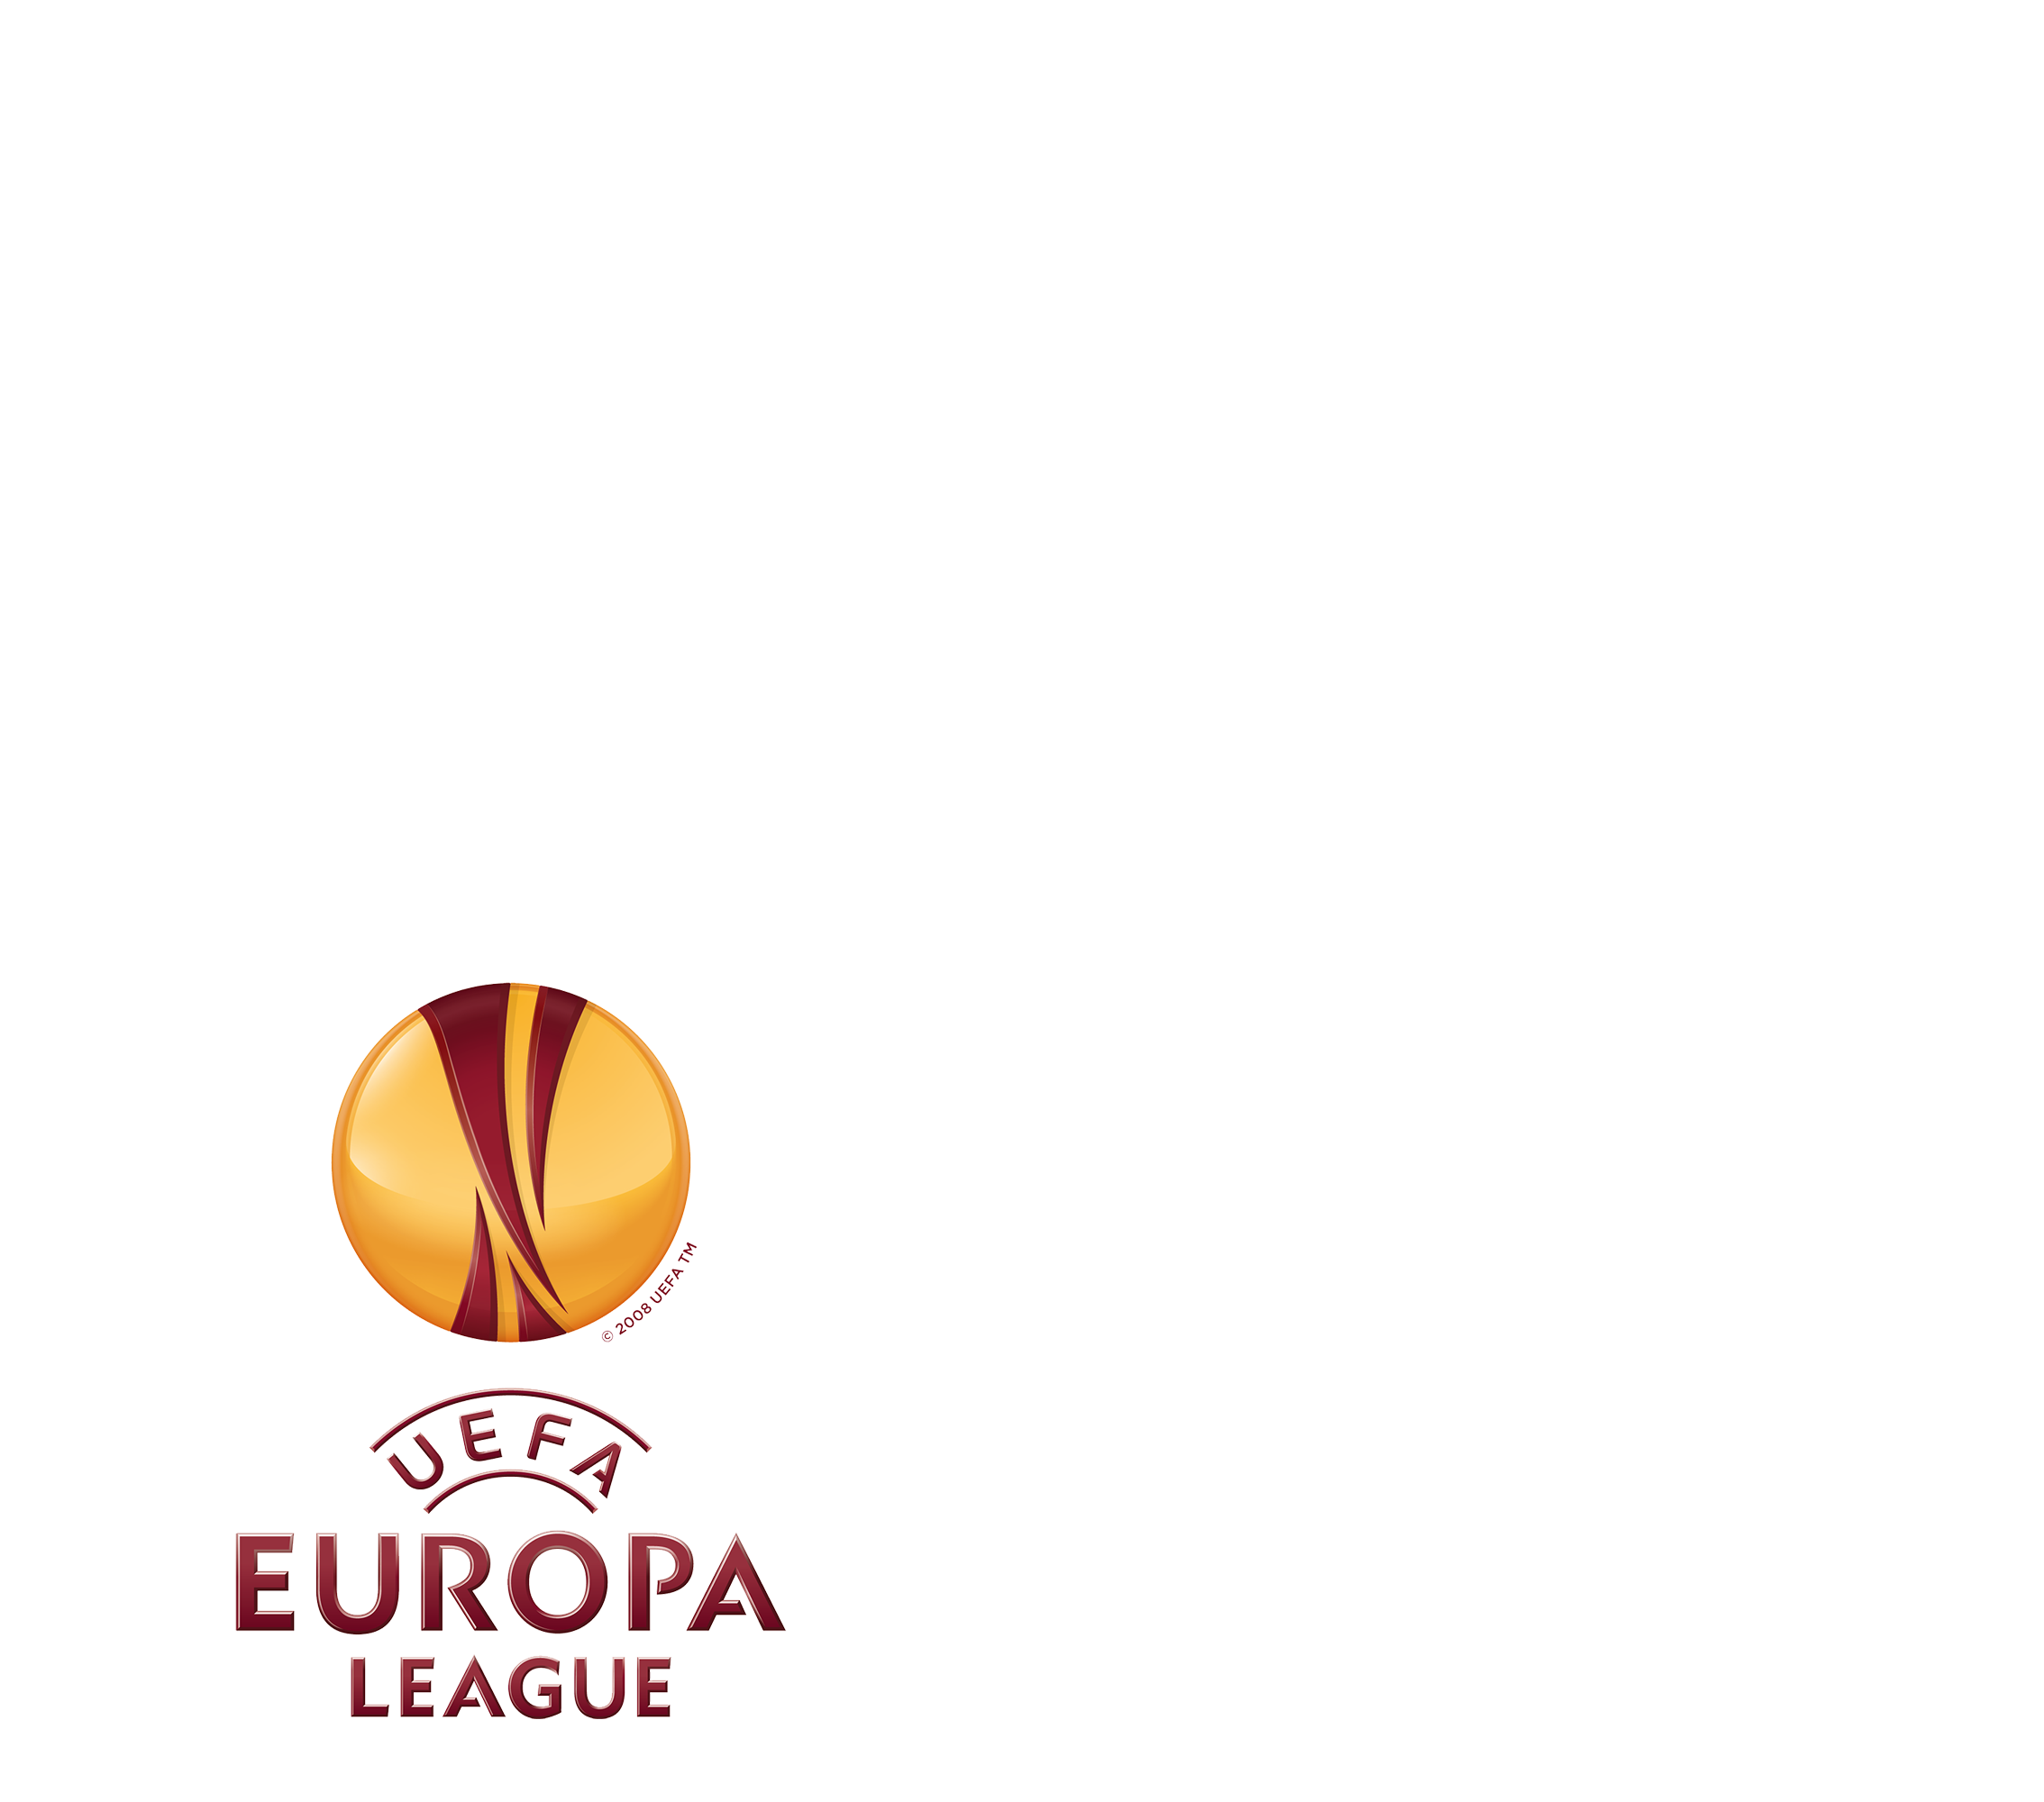 Europa League 2020/21